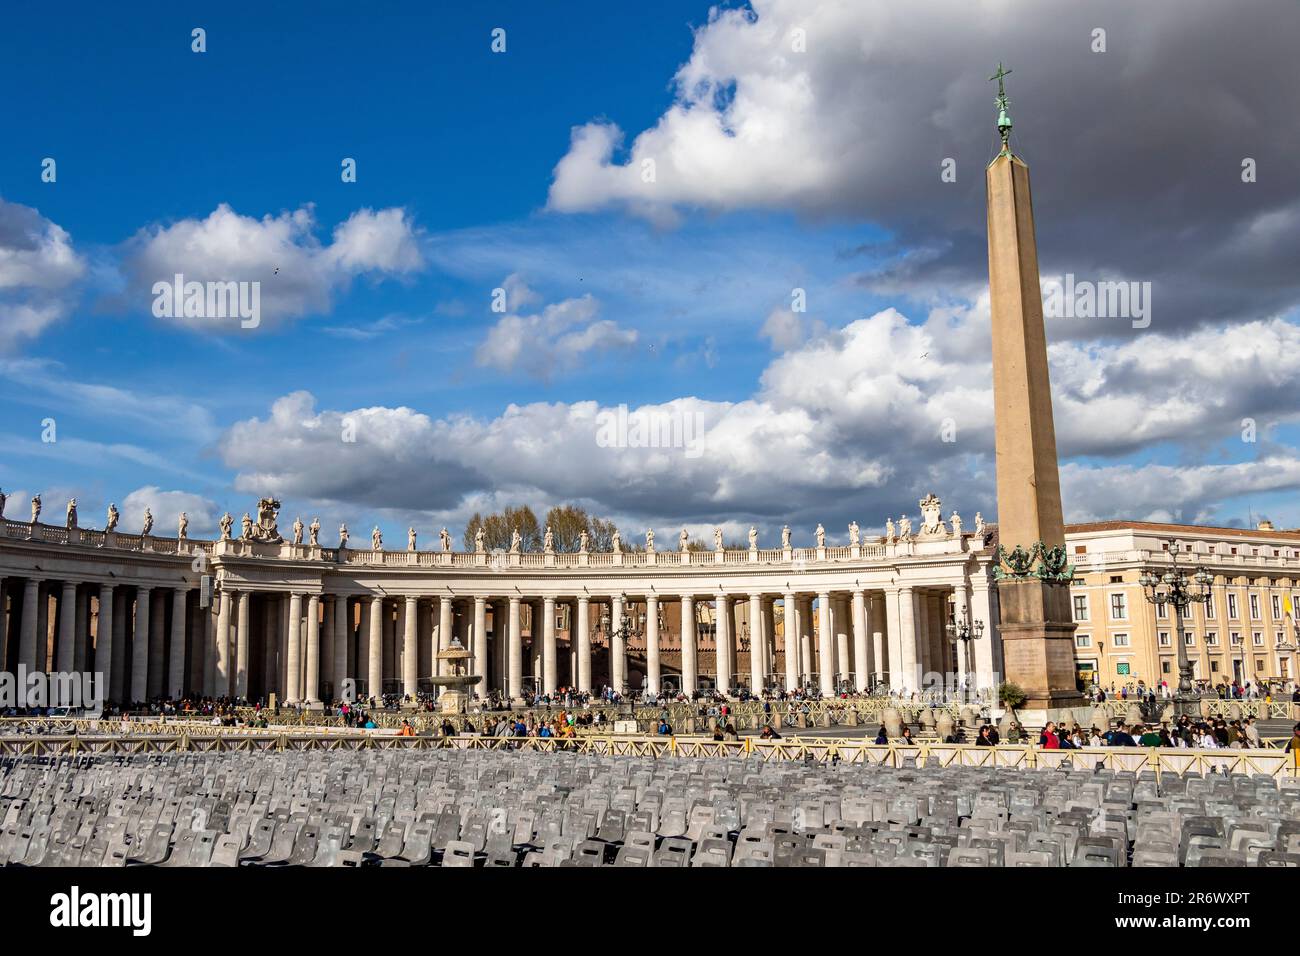 Reihen leerer Plastikstühle vor dem Obelisken auf dem Petersplatz, Vatikanstadt Stockfoto